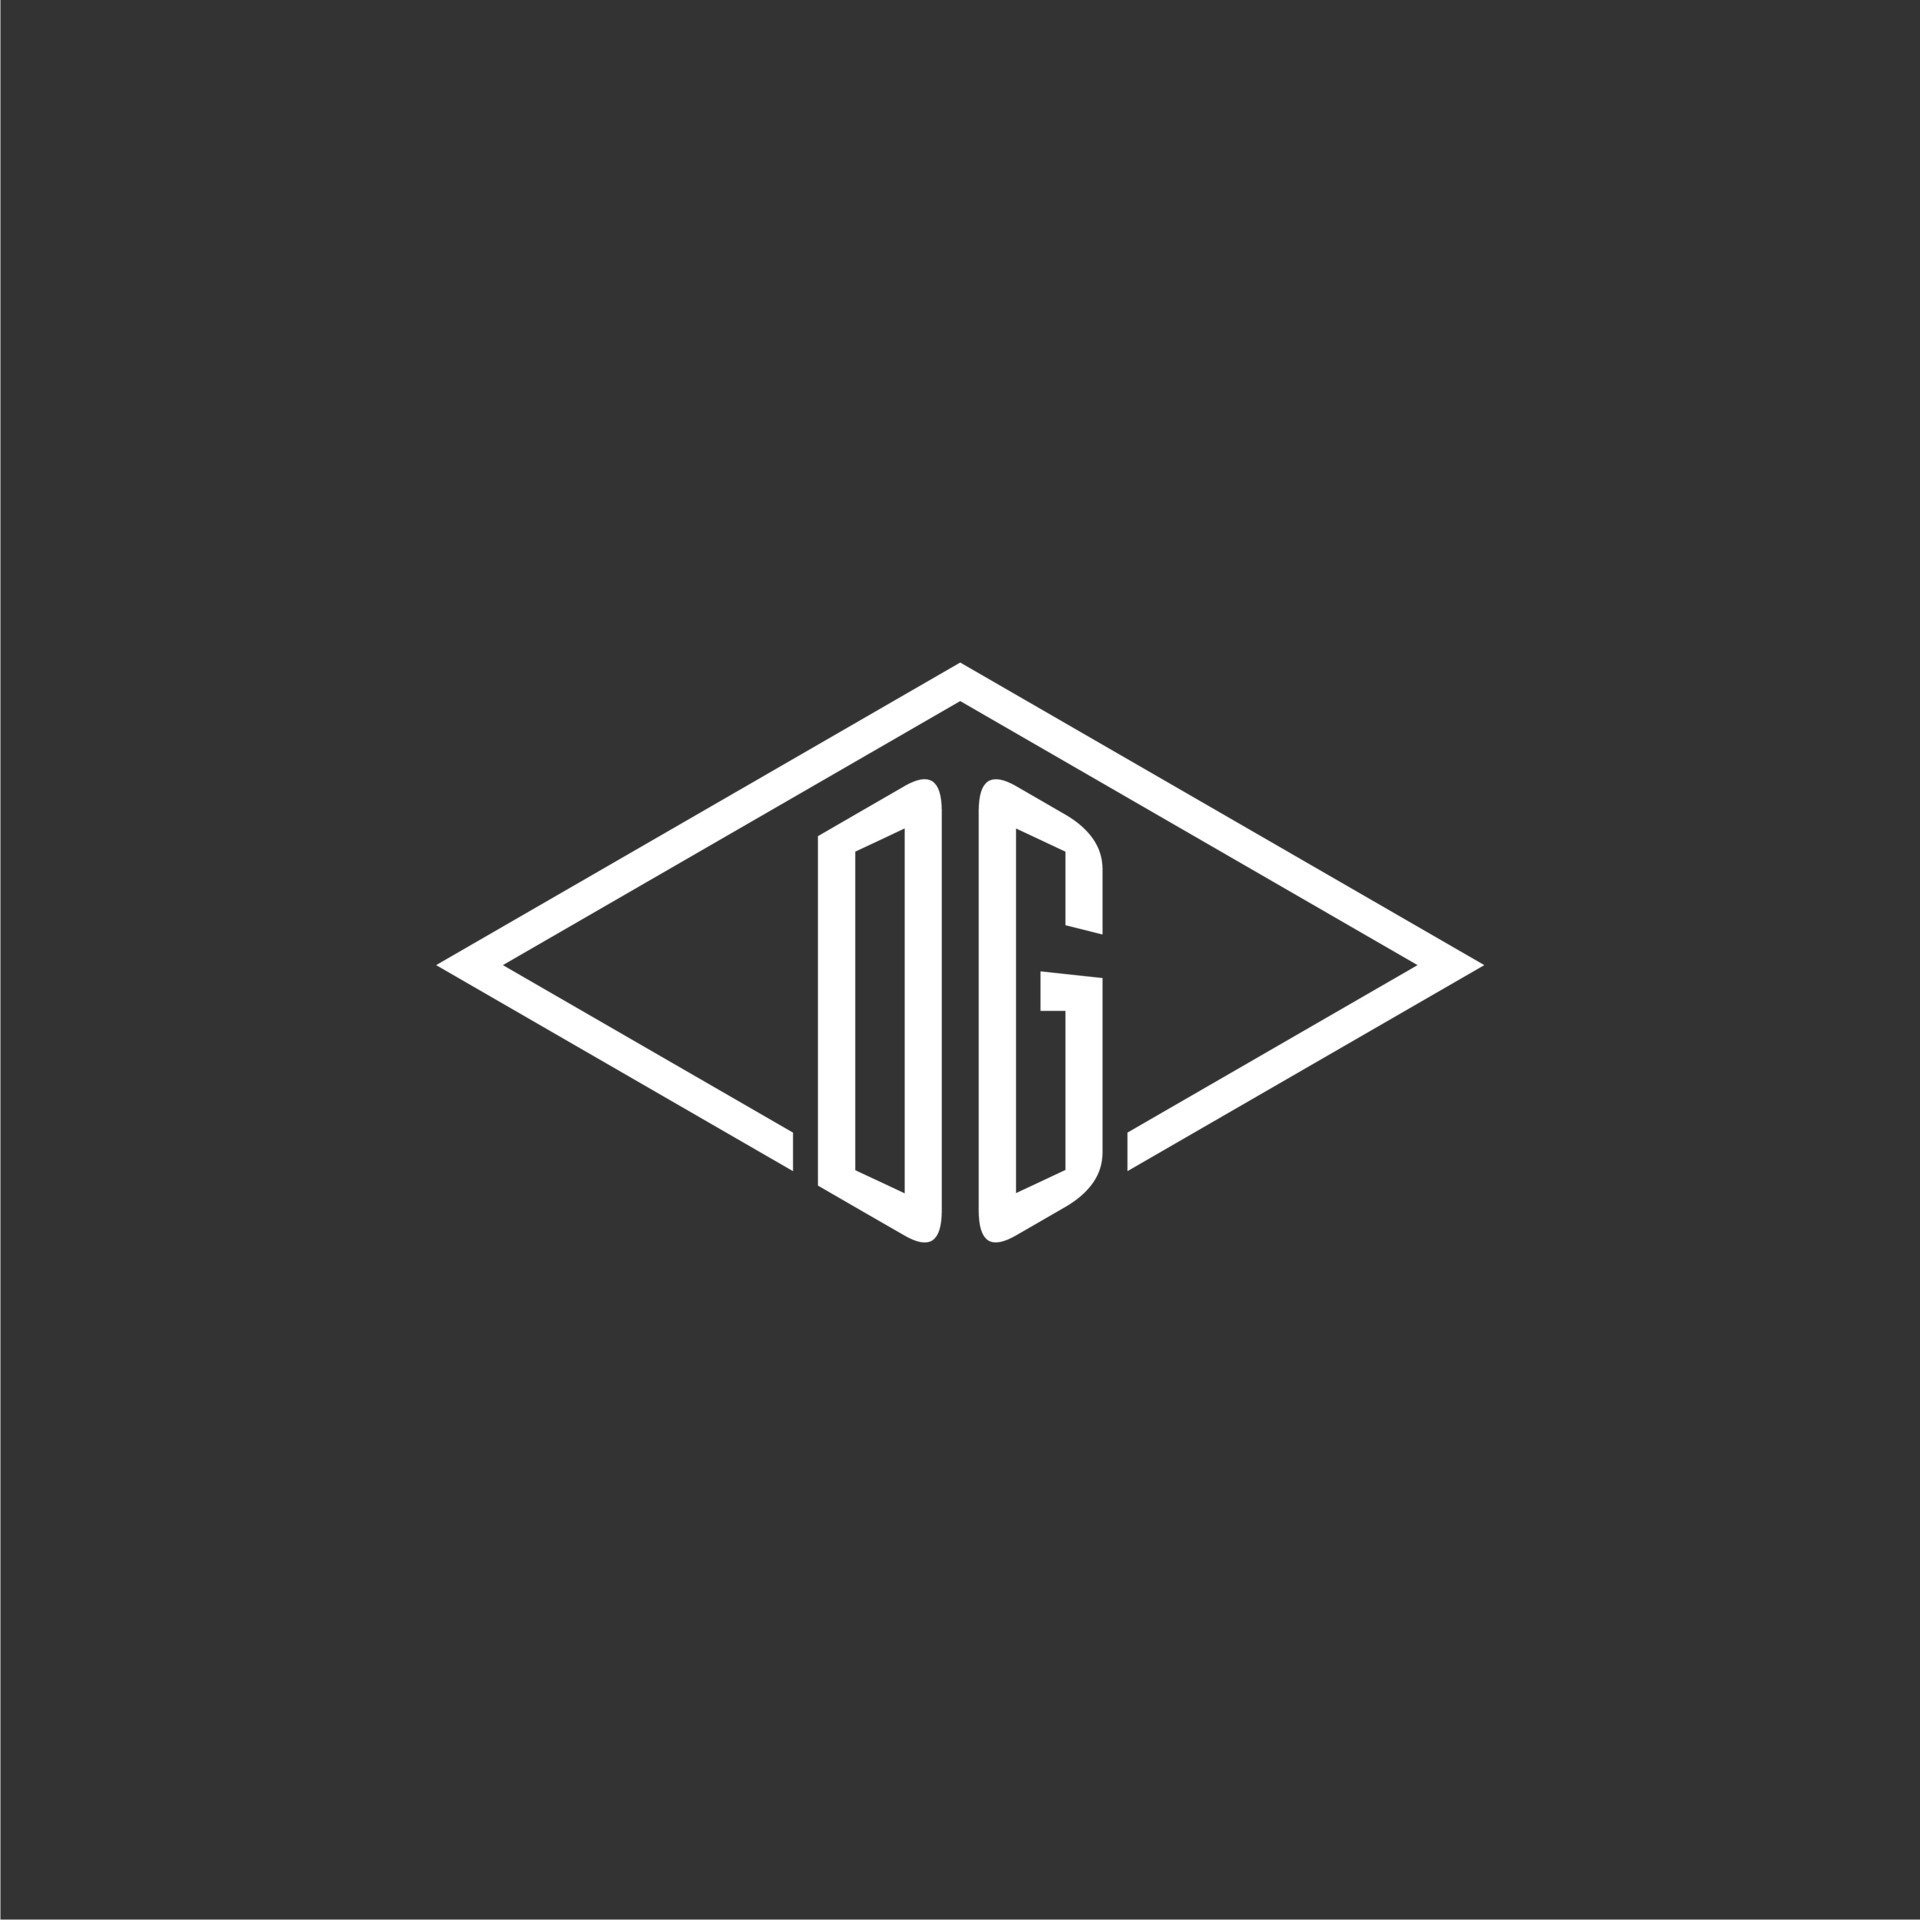 Initials DG logo monogram with simple diamond line style design ...